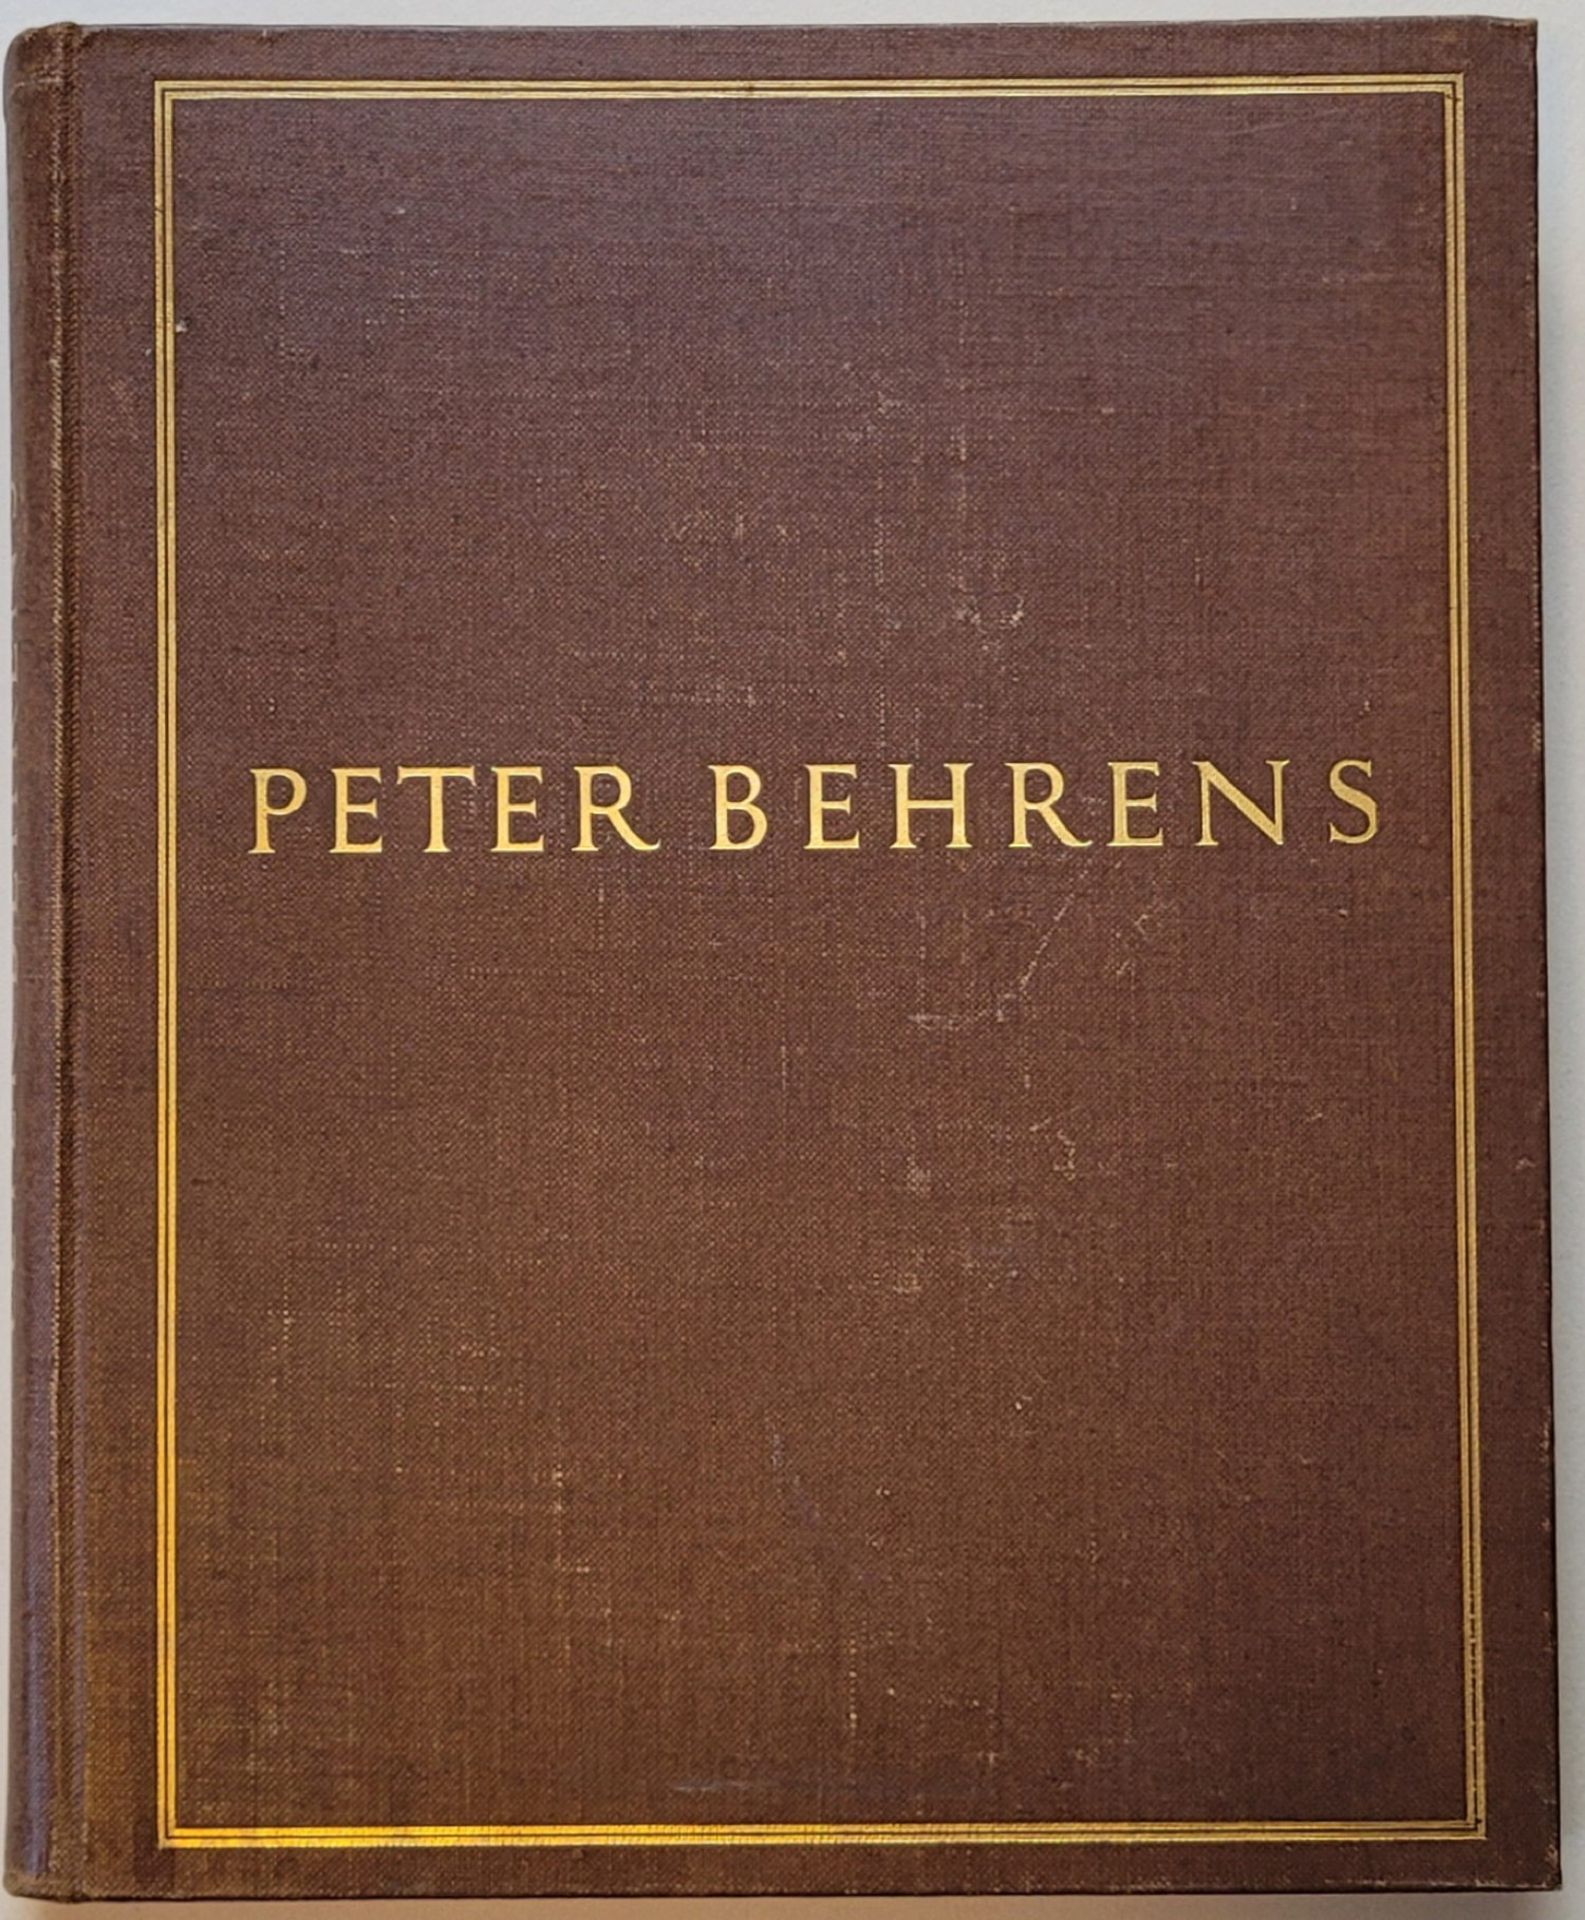 Georg Müller Verlag - Fritz Hoeber. Peter Behrens.